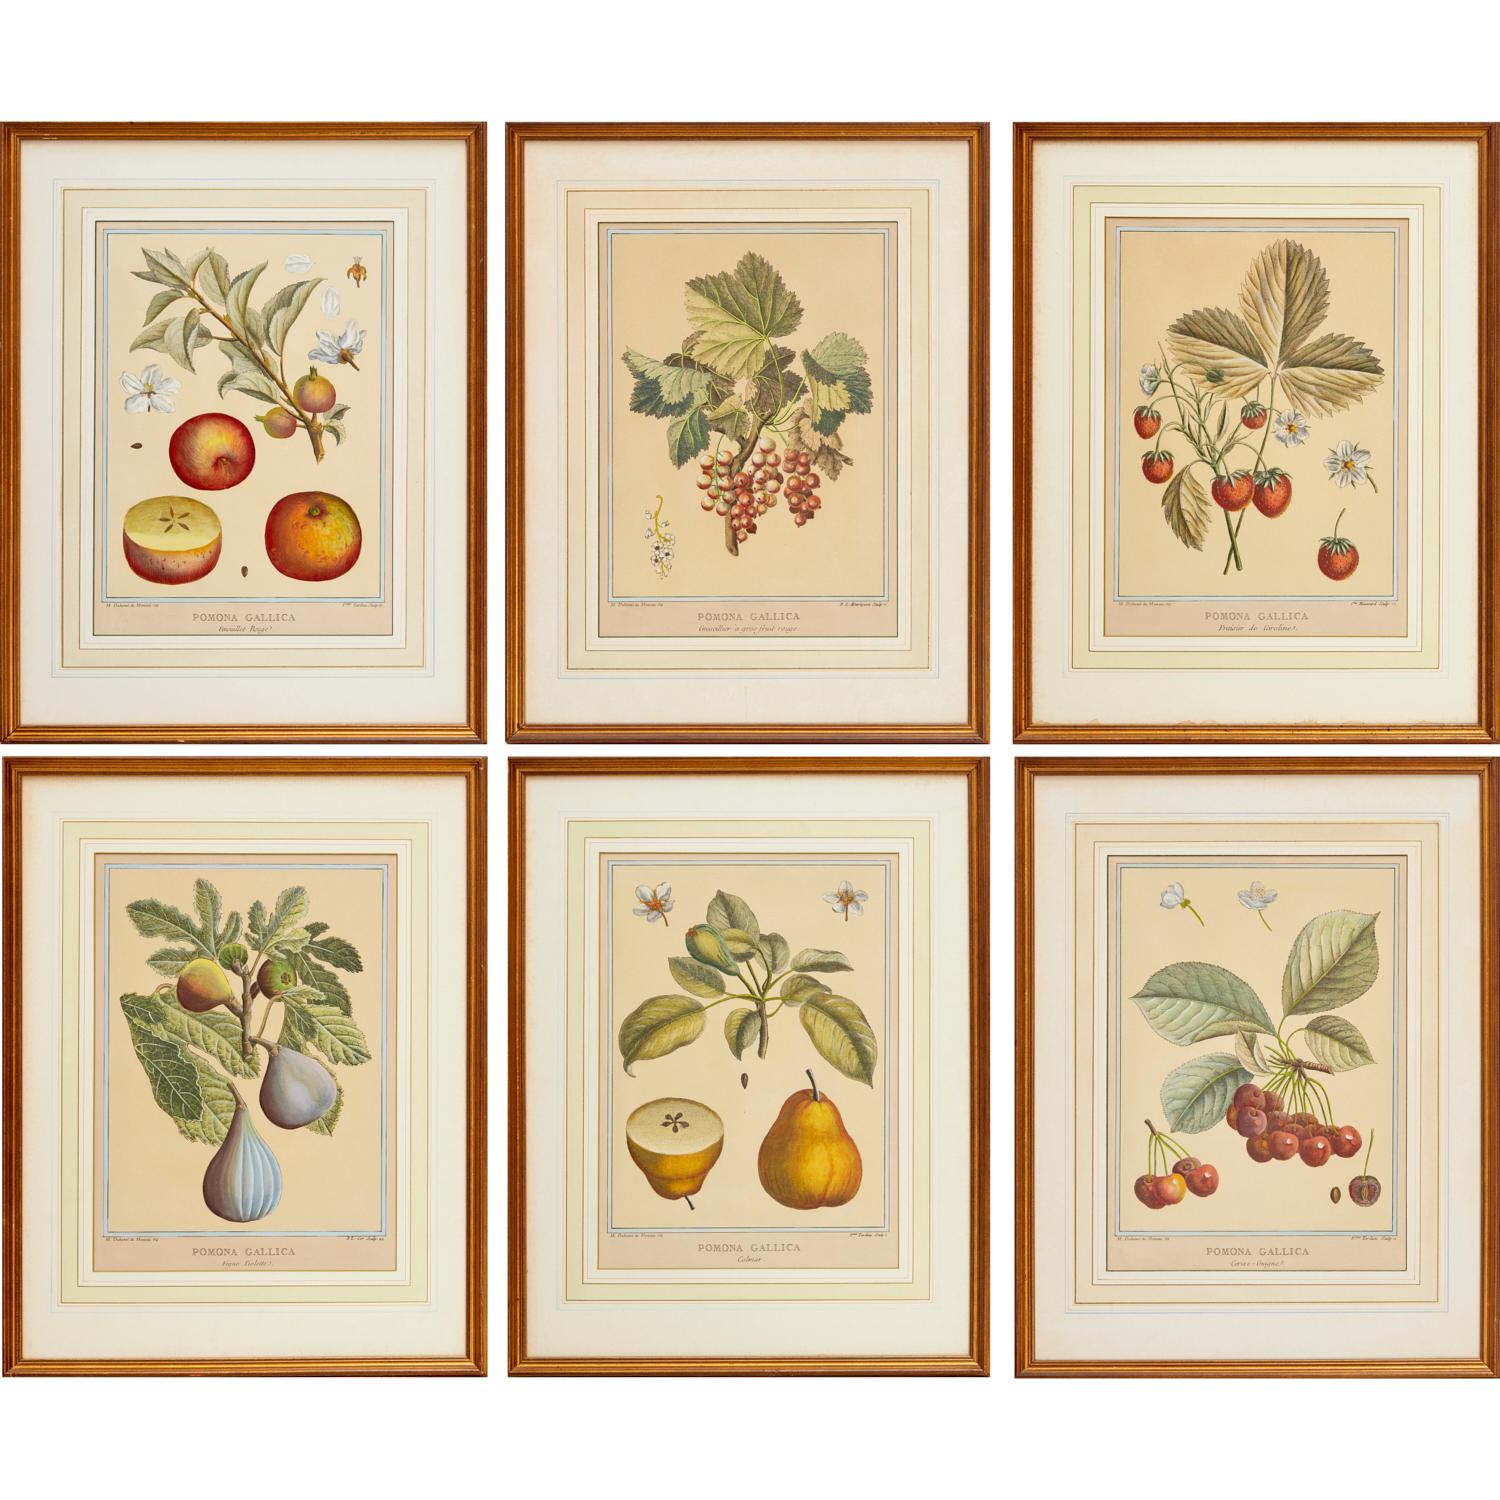 Glass Vintage, After Duhamel du Monceau, (6) Hand-Colored Prints of Fruits and Berries